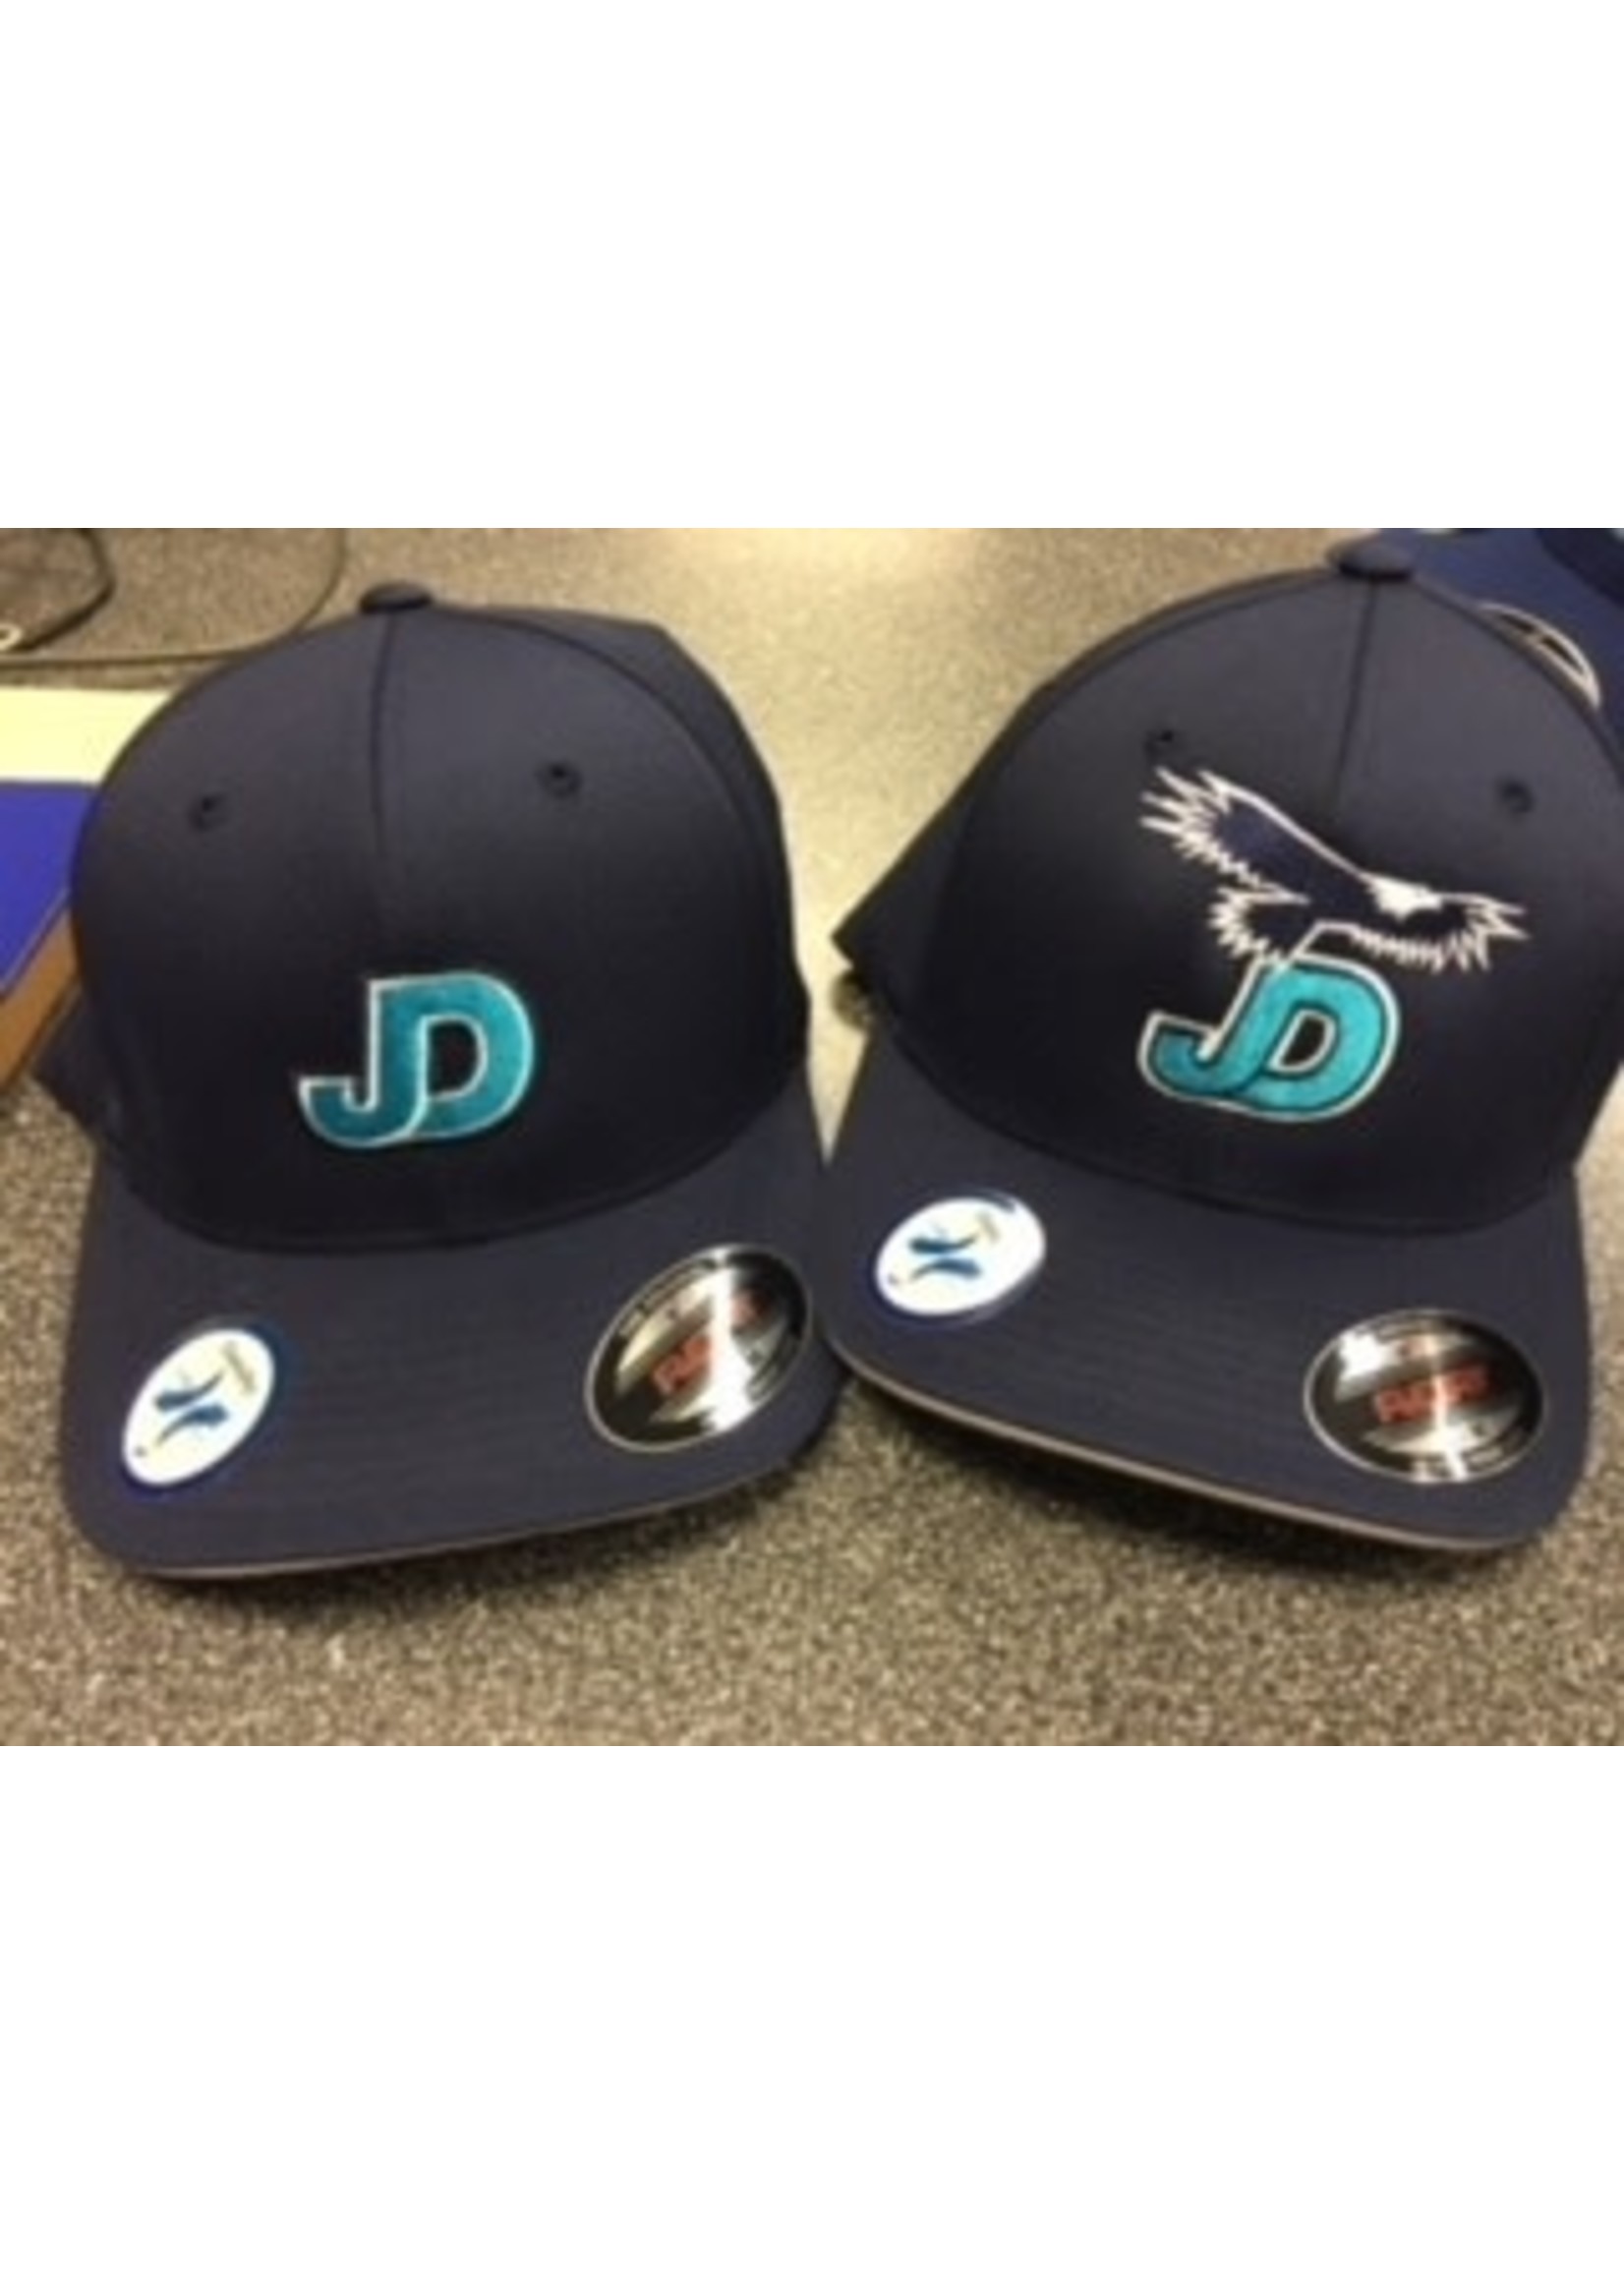 NON-UNIFORM JDS-Hats flex fit with or without eagle